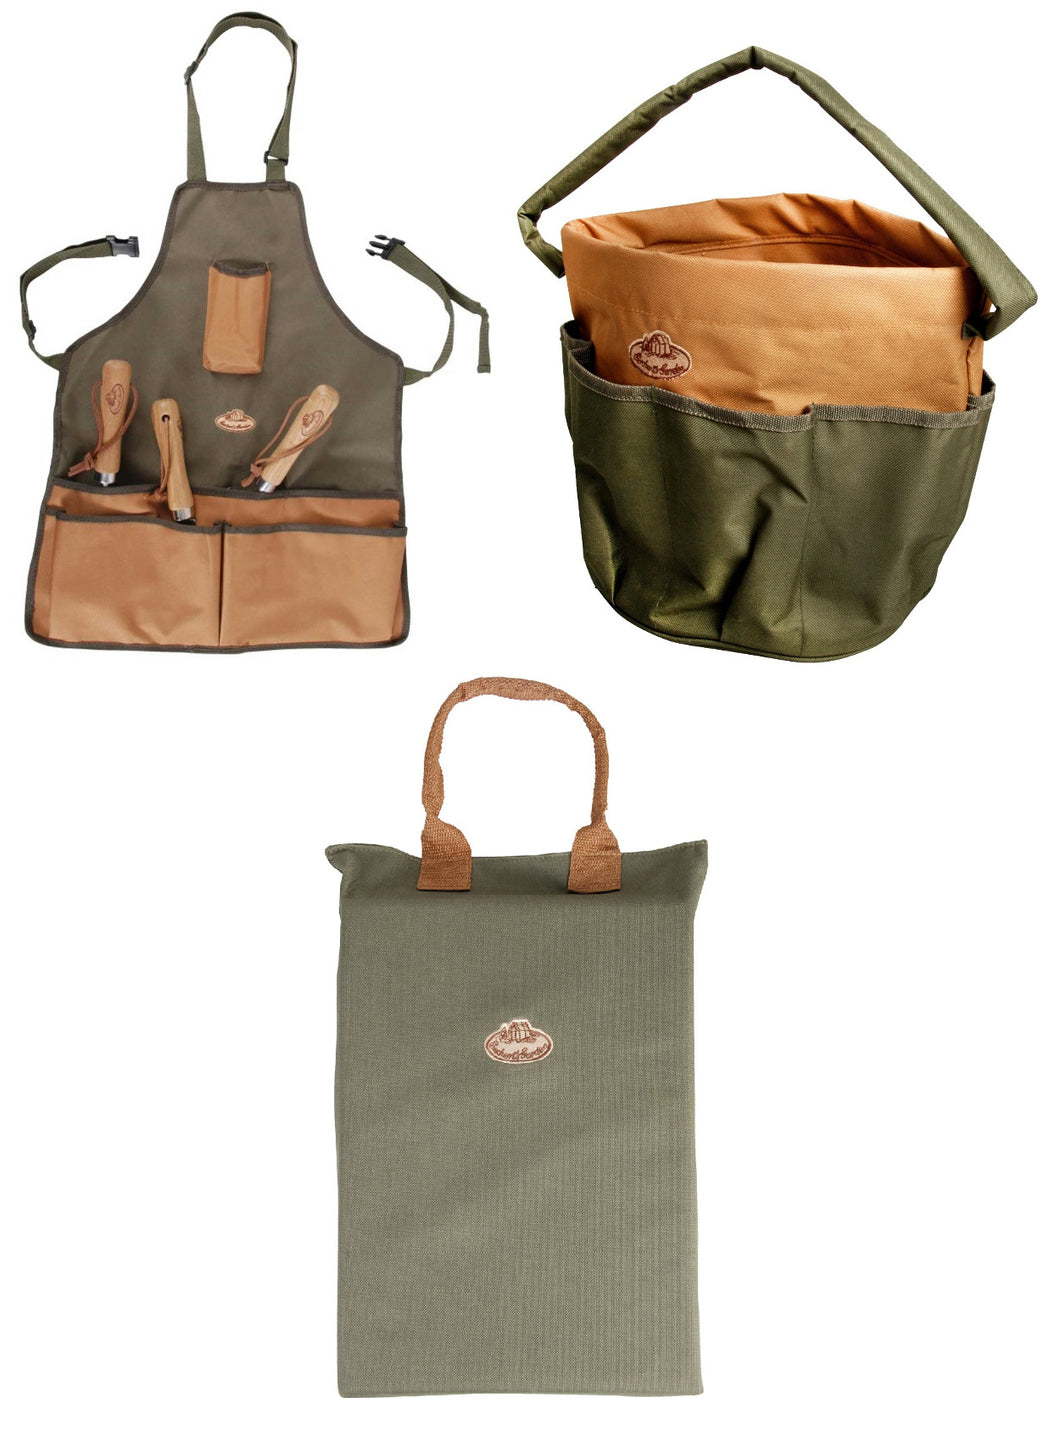 https://images.esellerpro.com/2278/I/146/381/khaki-green-brown-gardening-set-bucket-bag-garden-apron-kneeling-pad-new.jpg